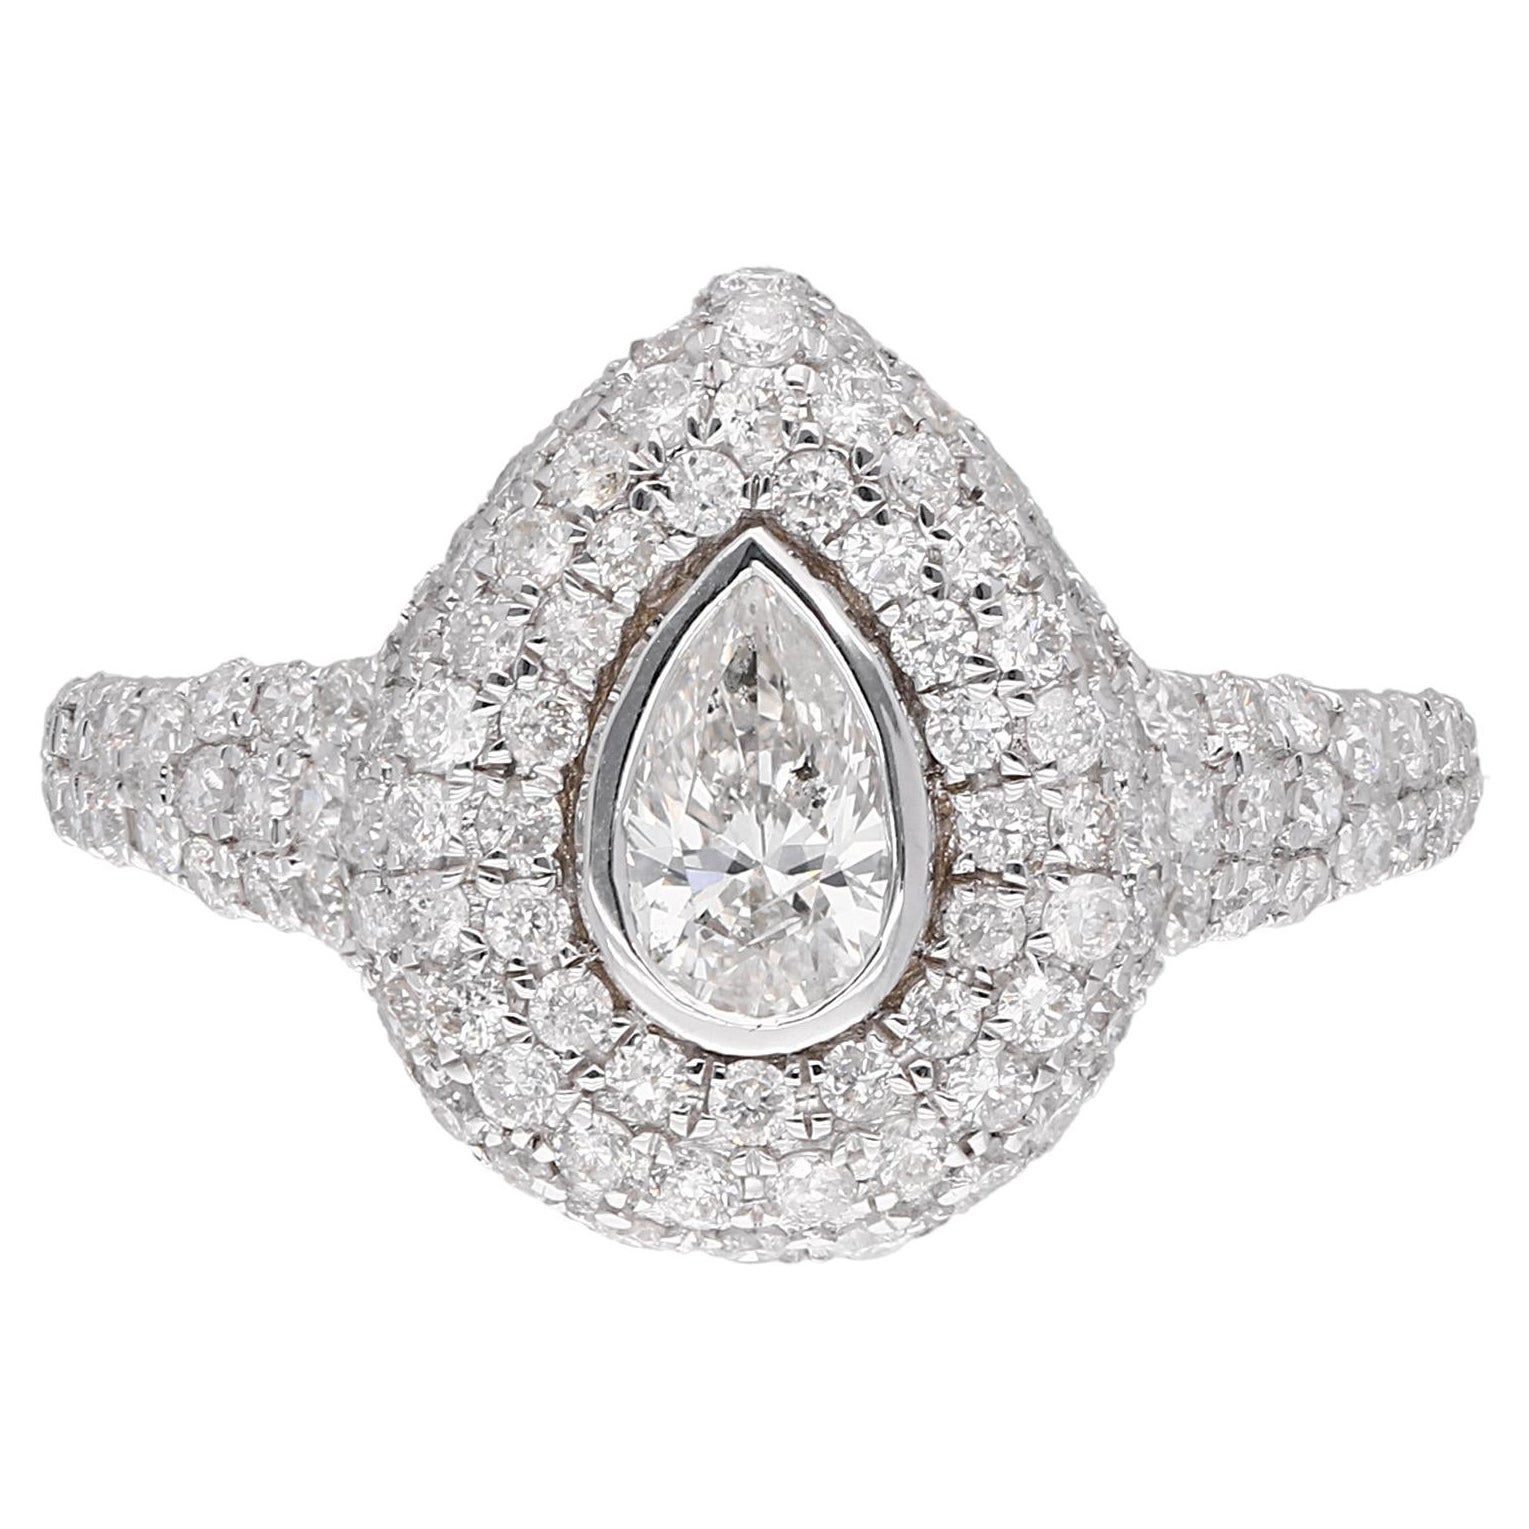 1.66 Carat Pear Diamond Studded Ring 18 Karat White Gold Handmade Fine Jewelry